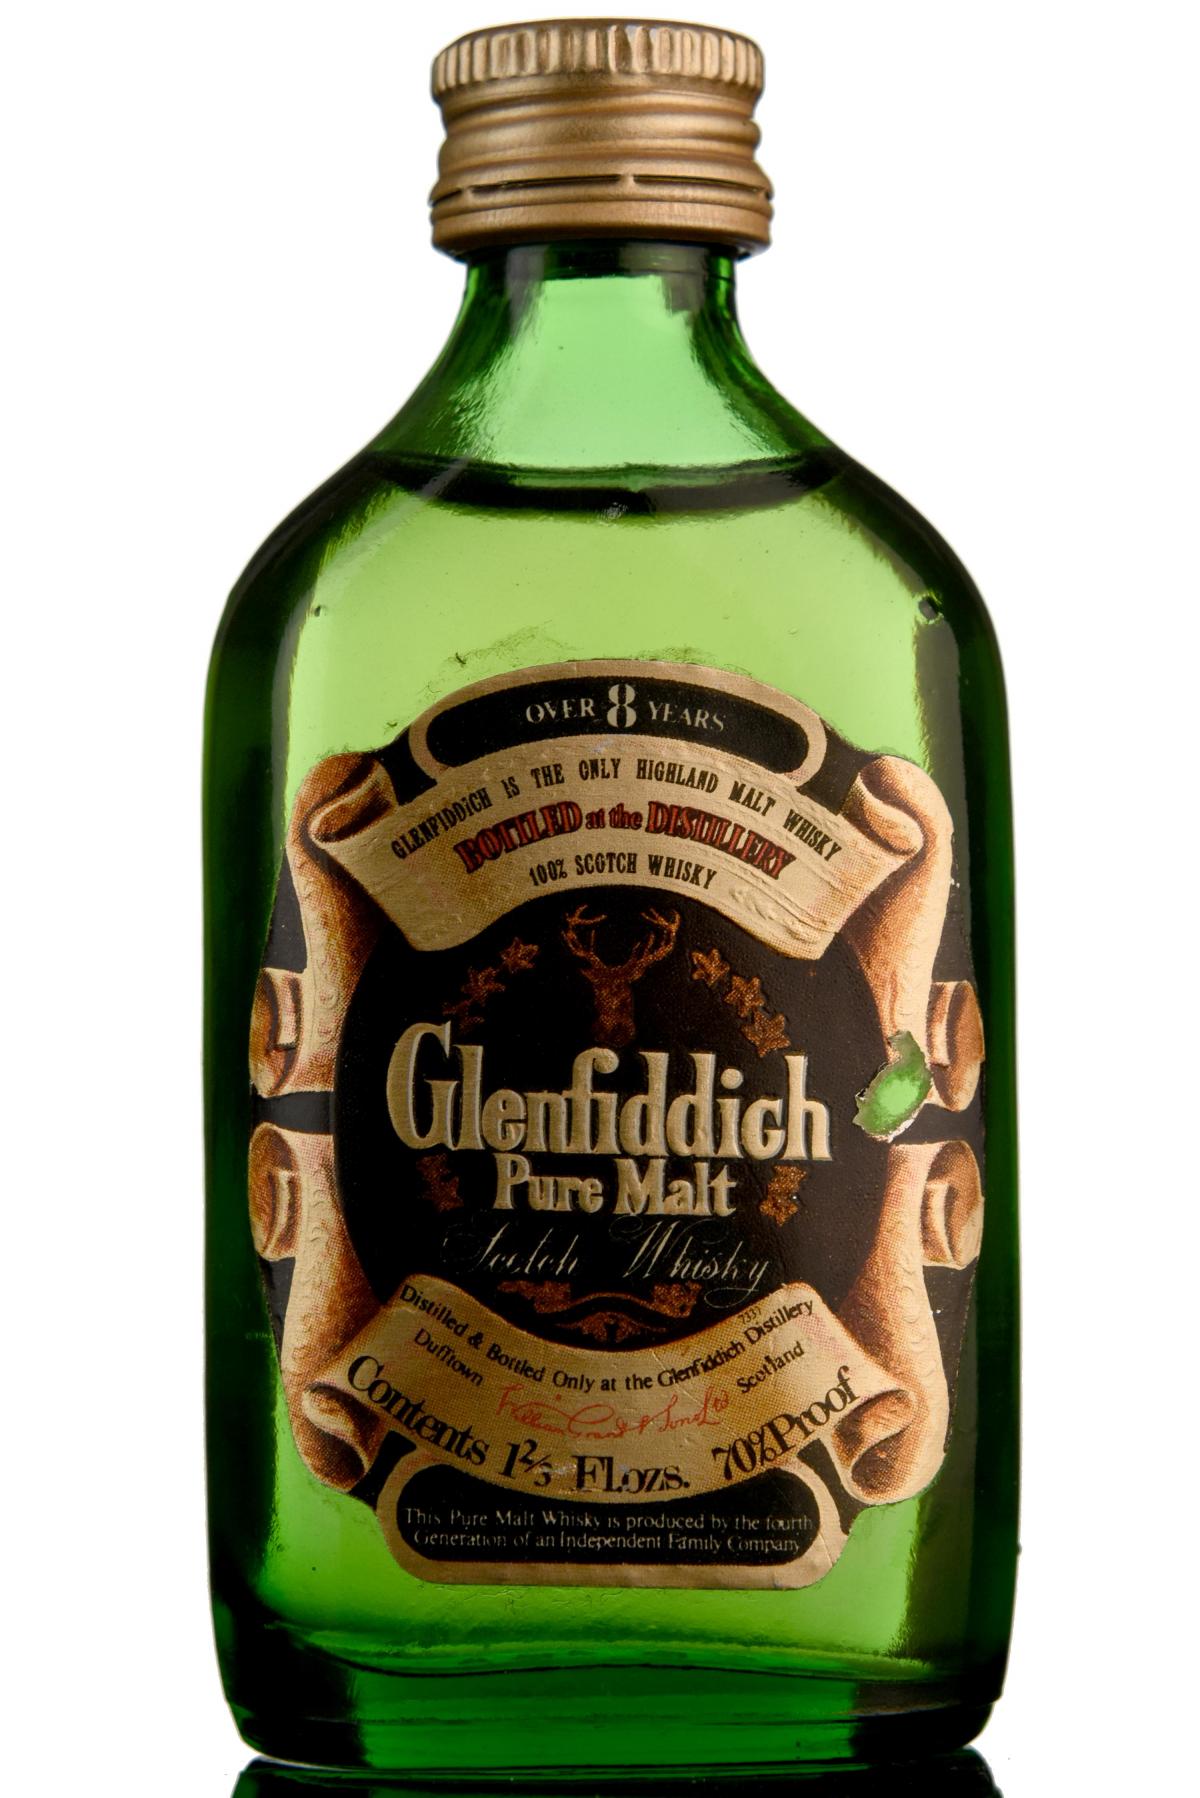 Glenfiddich Pure Malt Miniature